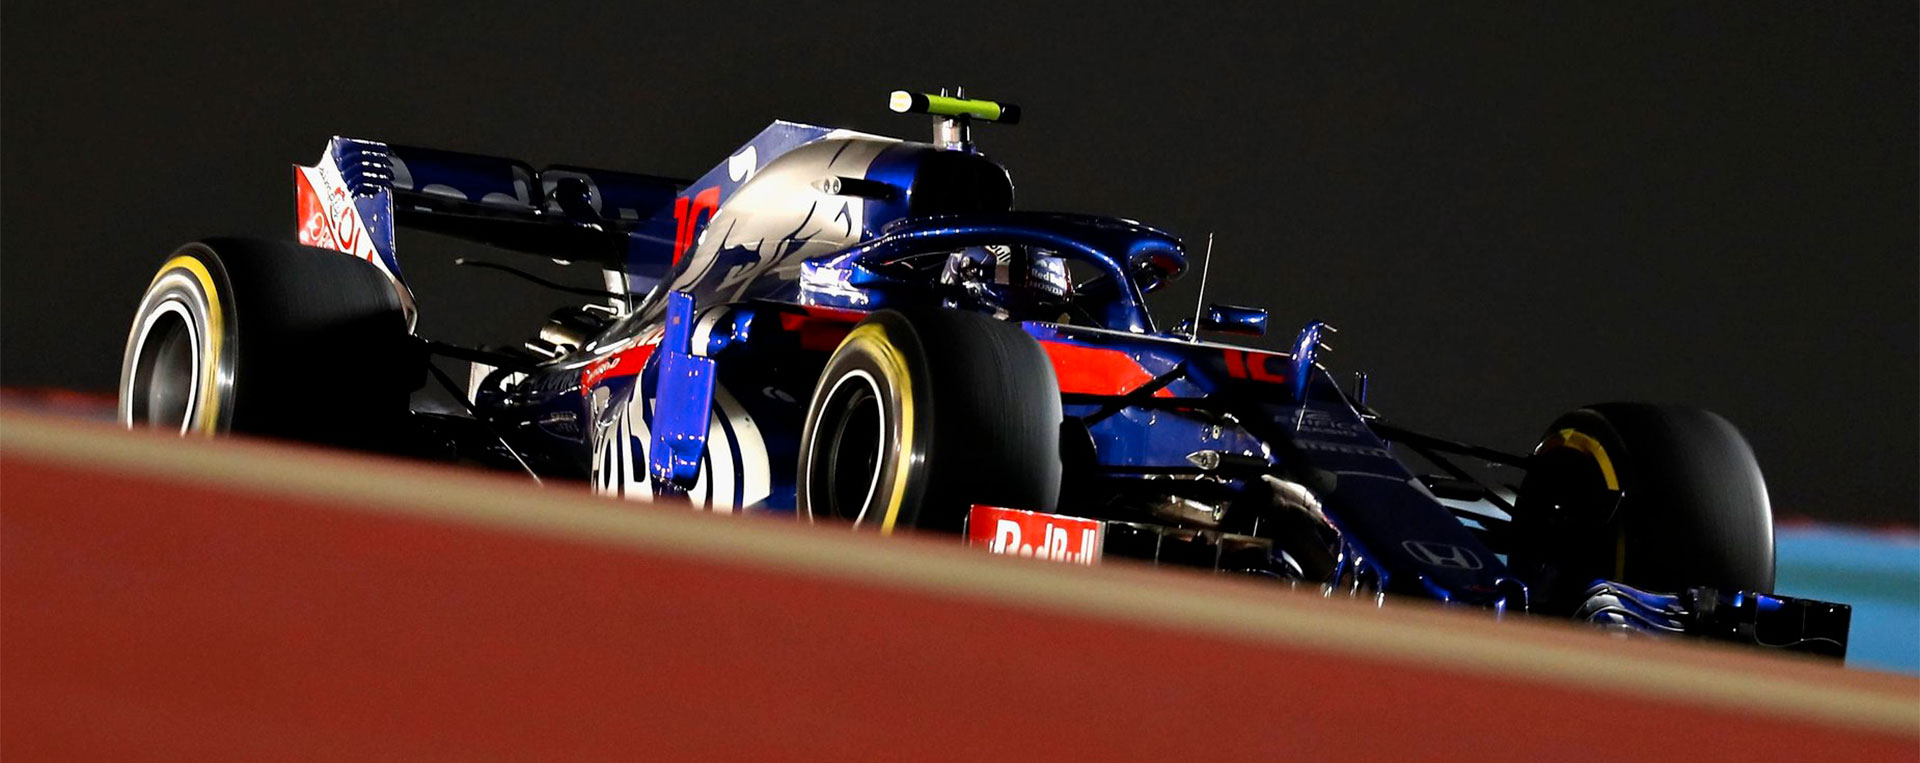 Pierre Gasly sur Toro Rosso (Bahrain 2018) - Zoom